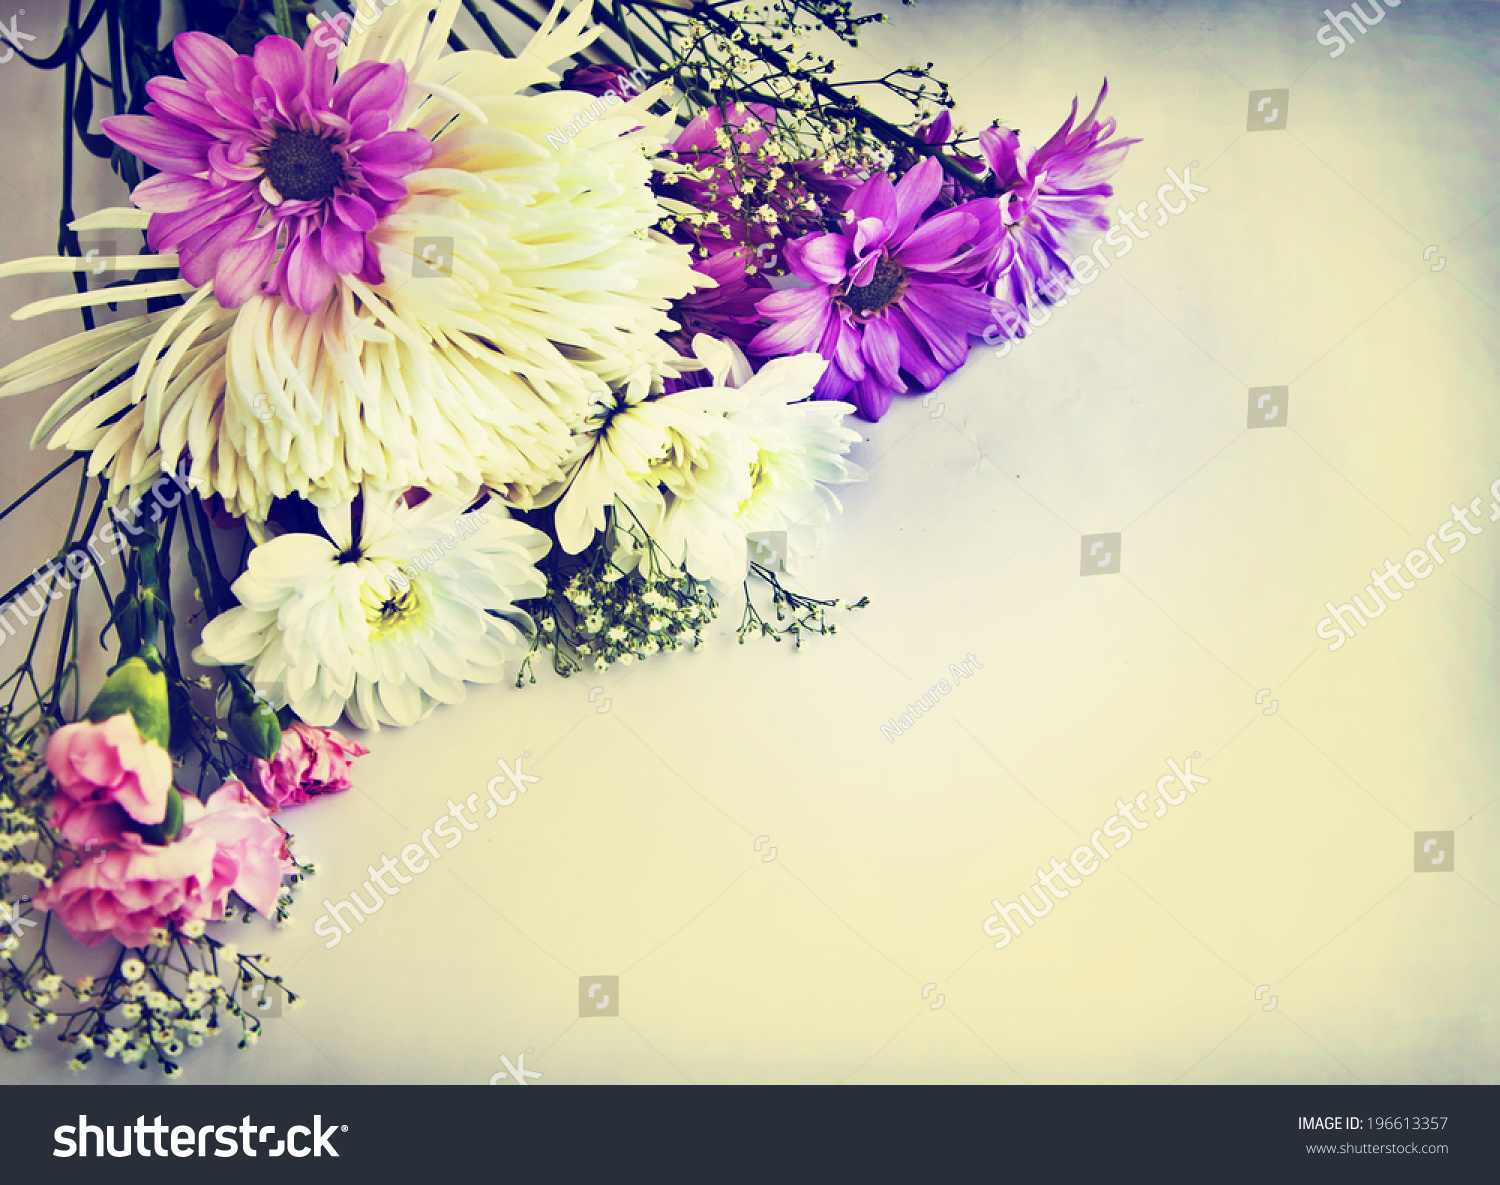 Nice Flower Wallpapers | HD Wallpapers | ID #5604